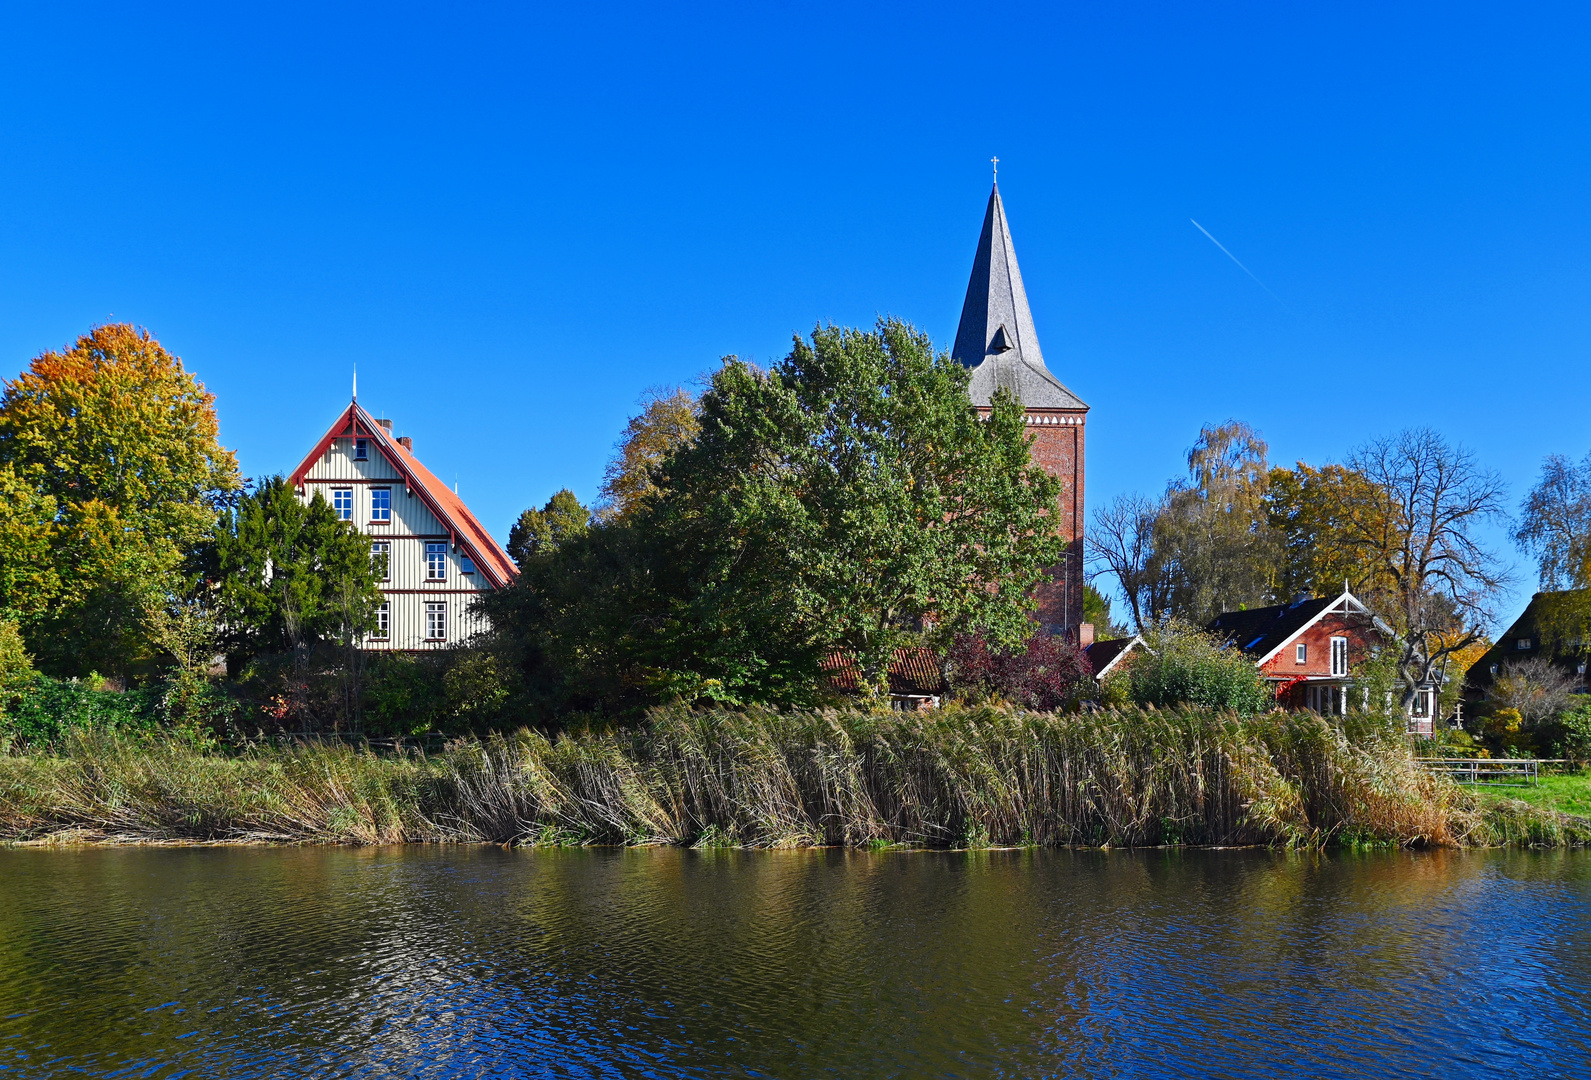 Berkenthin am Elbe-Lübeck-Kanal im Oktober 2021